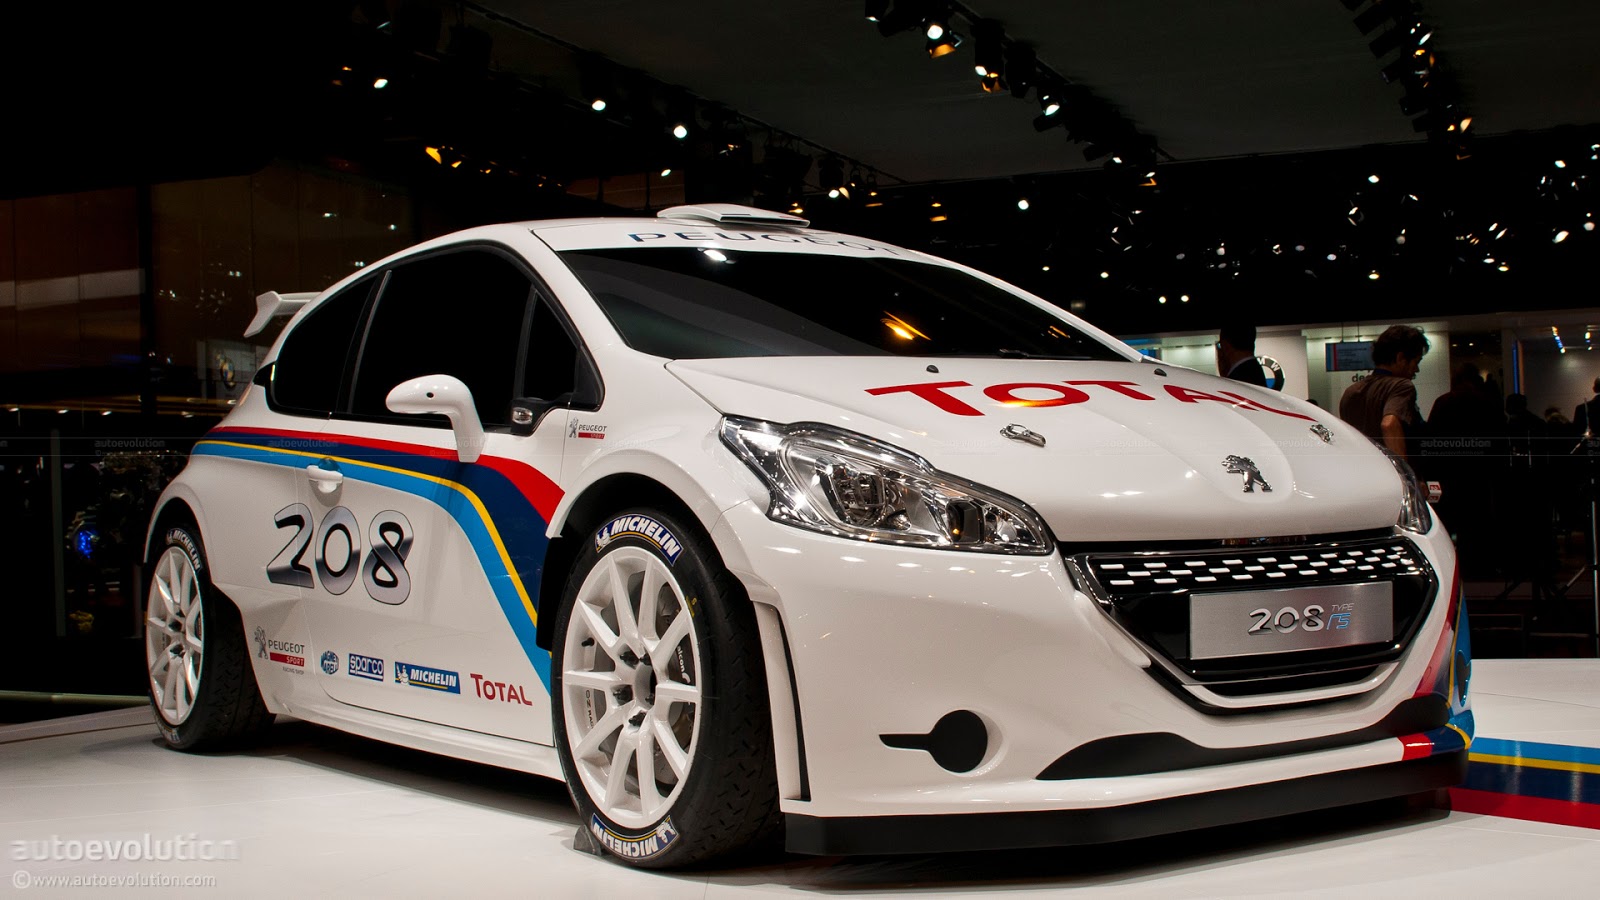 2013 Peugeot 208 R5 Rally Car